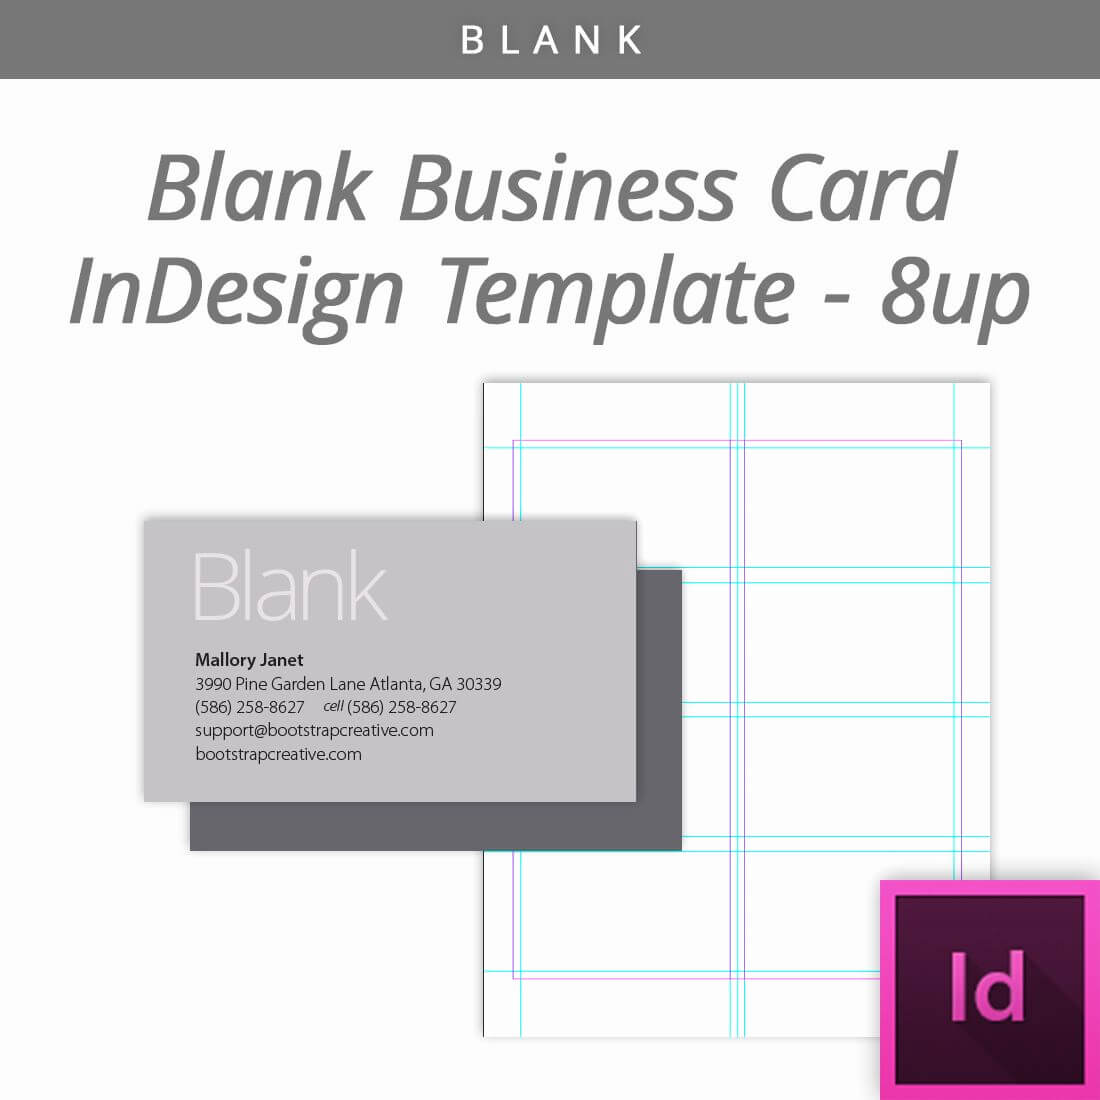 Fdb30 Blank Business Card Template – Cvaanmeldservice.nl With Blank Business Card Template Photoshop